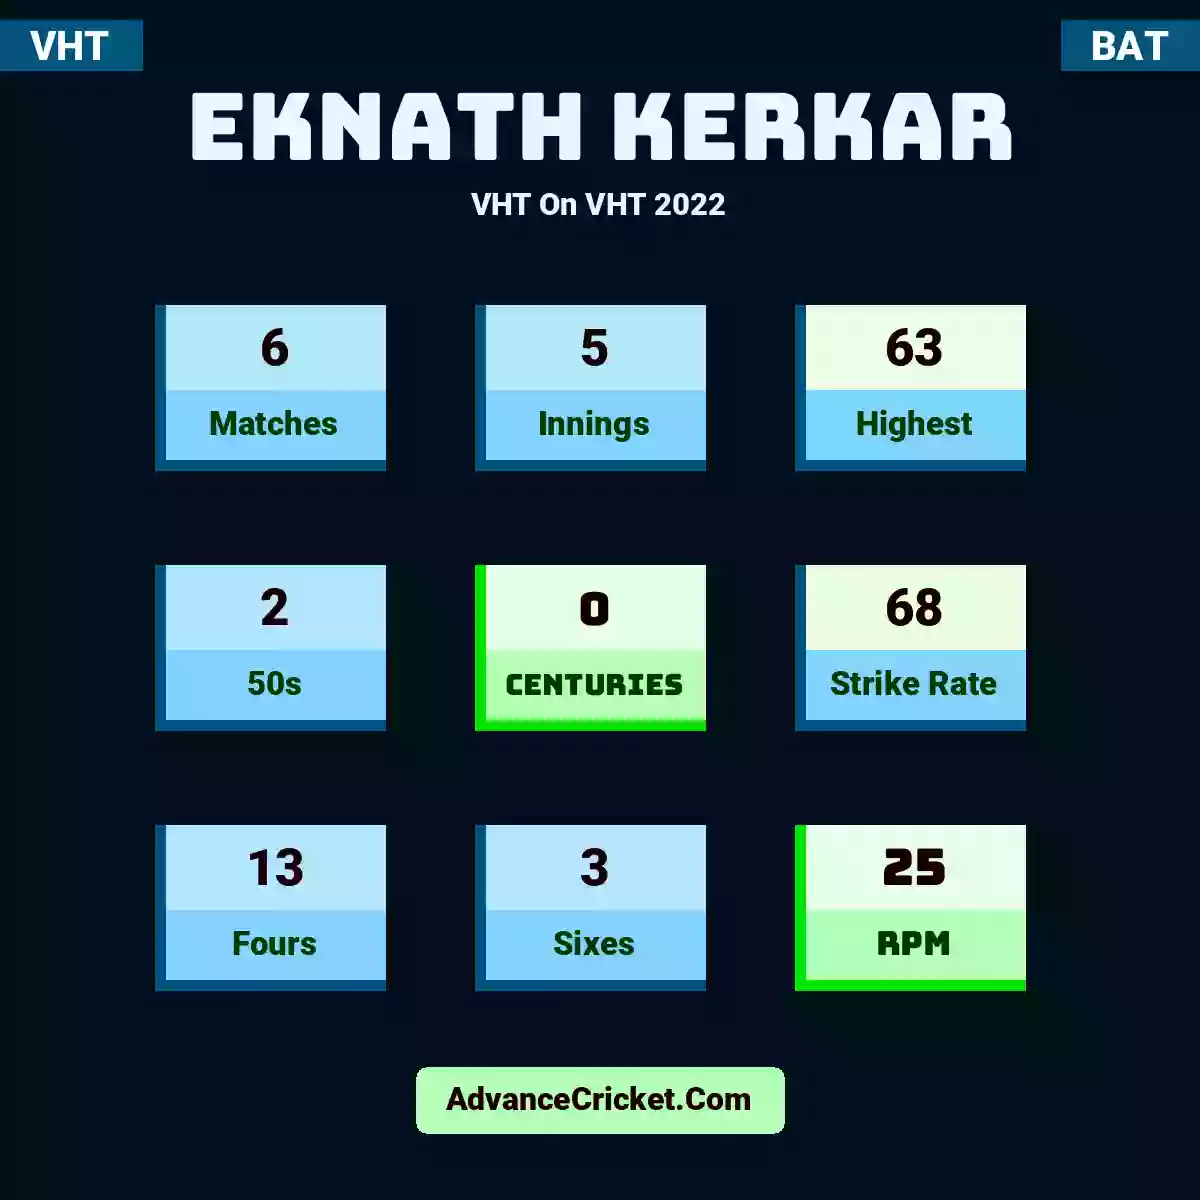 Eknath Kerkar VHT  On VHT 2022, Eknath Kerkar played 6 matches, scored 63 runs as highest, 2 half-centuries, and 0 centuries, with a strike rate of 68. E.Kerkar hit 13 fours and 3 sixes, with an RPM of 25.